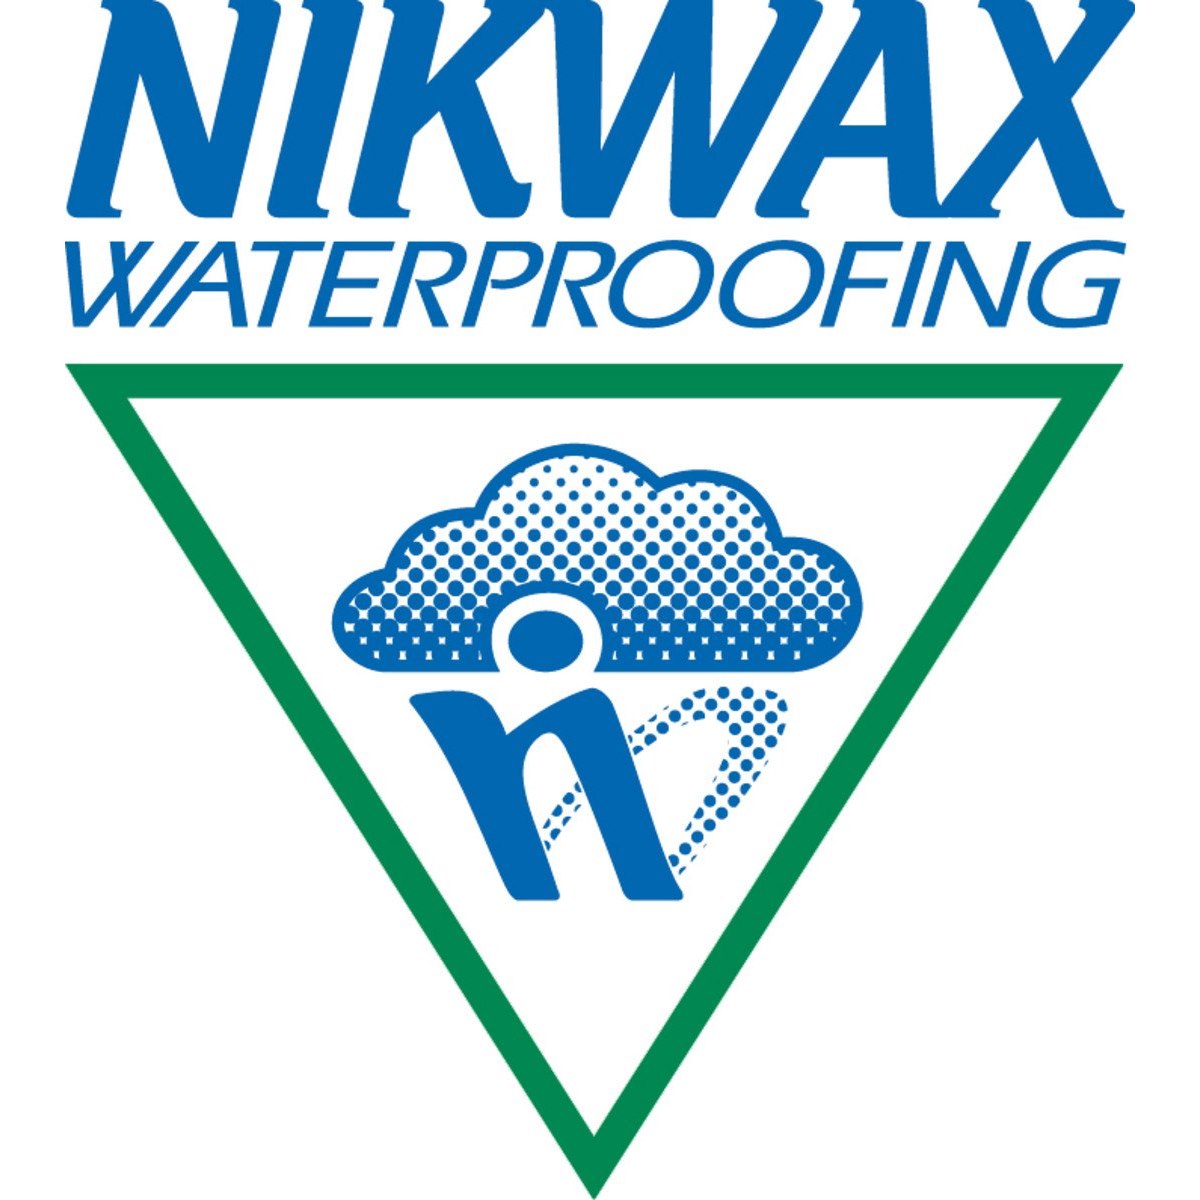 Nikwax Waterproofing Products